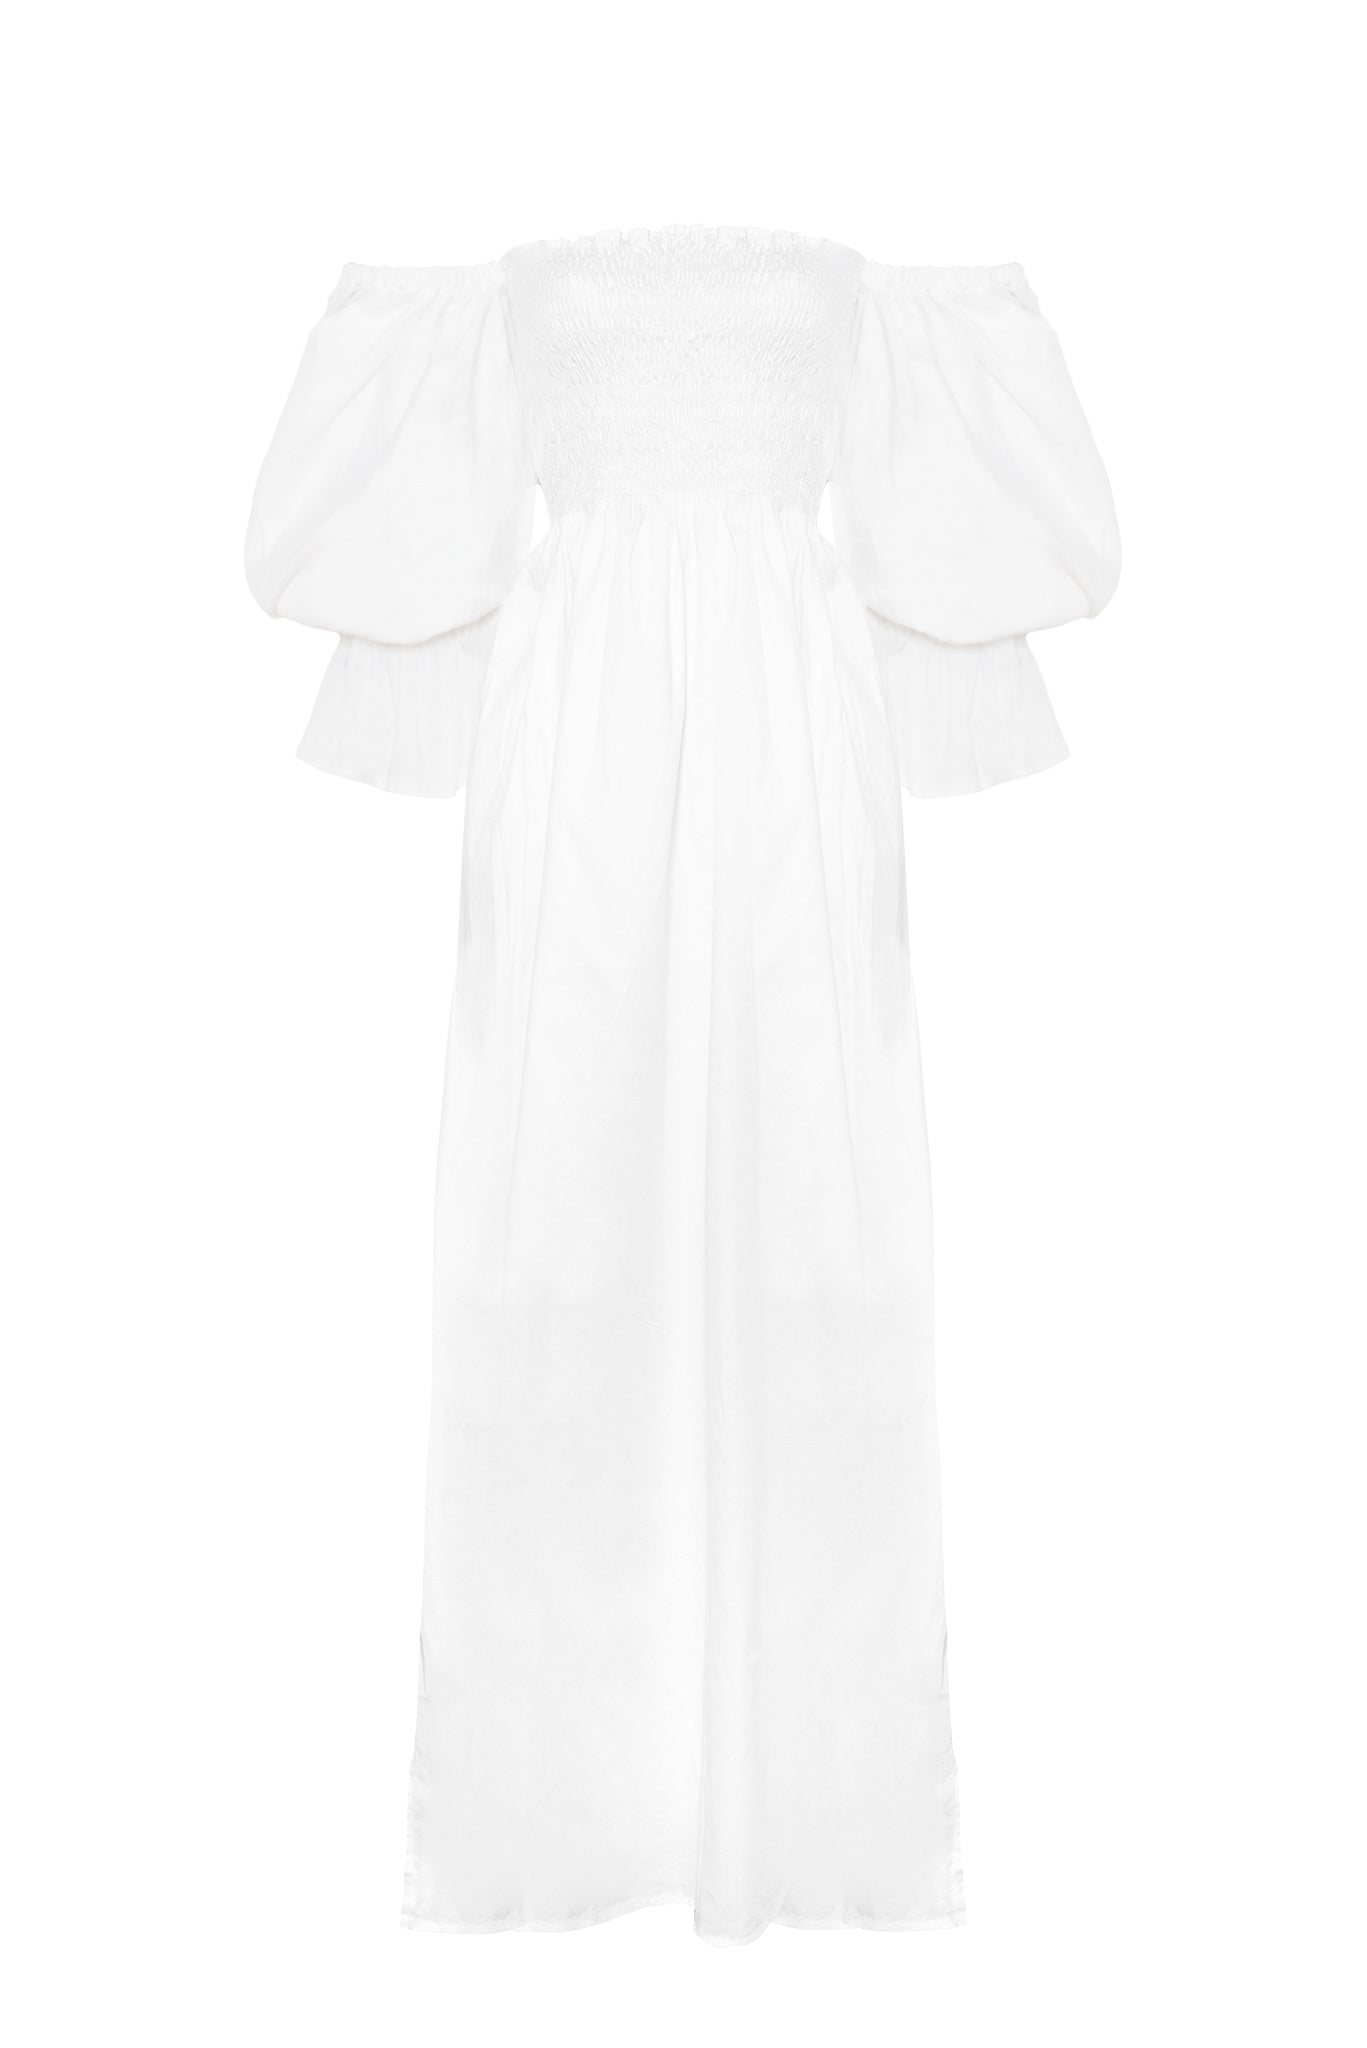 SENNA DRESS IN ORGANIC WHITE COTTON